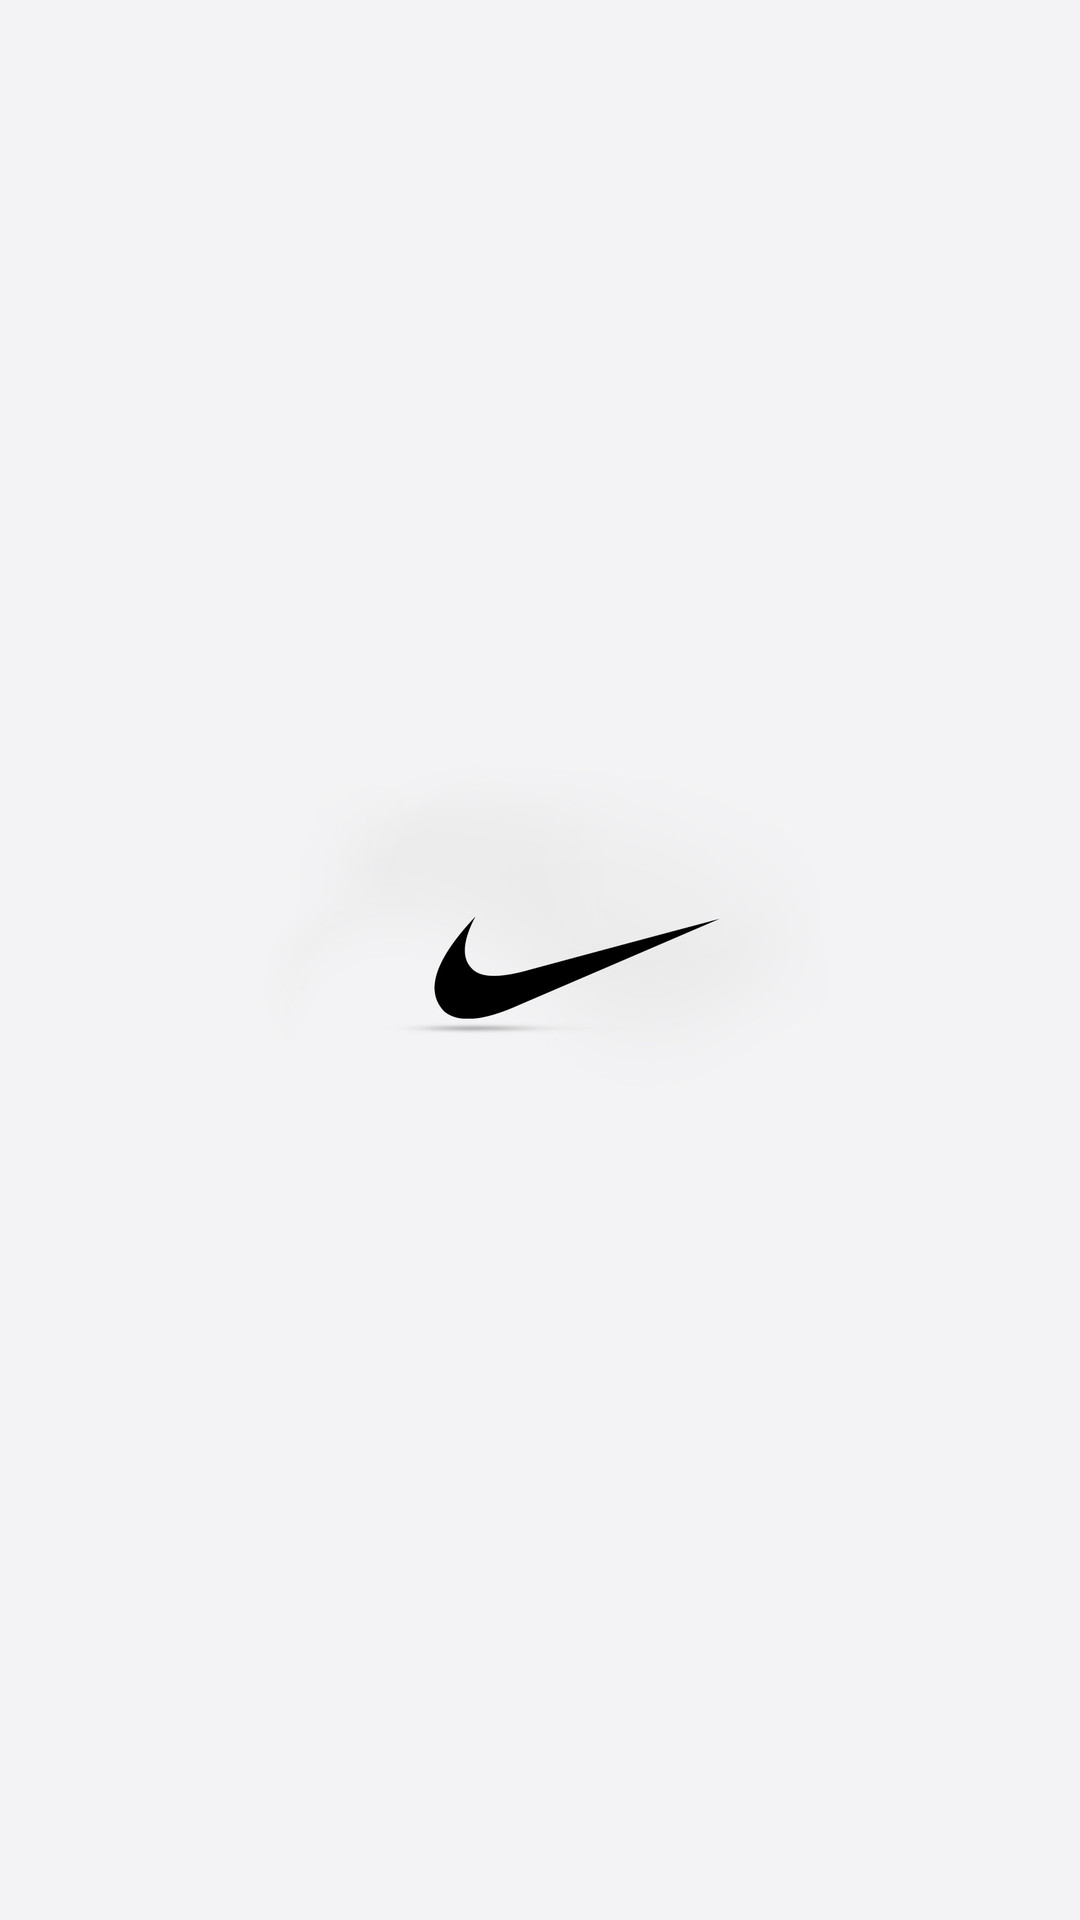 1080x1920 Nike Black And White Logo Wallpaper